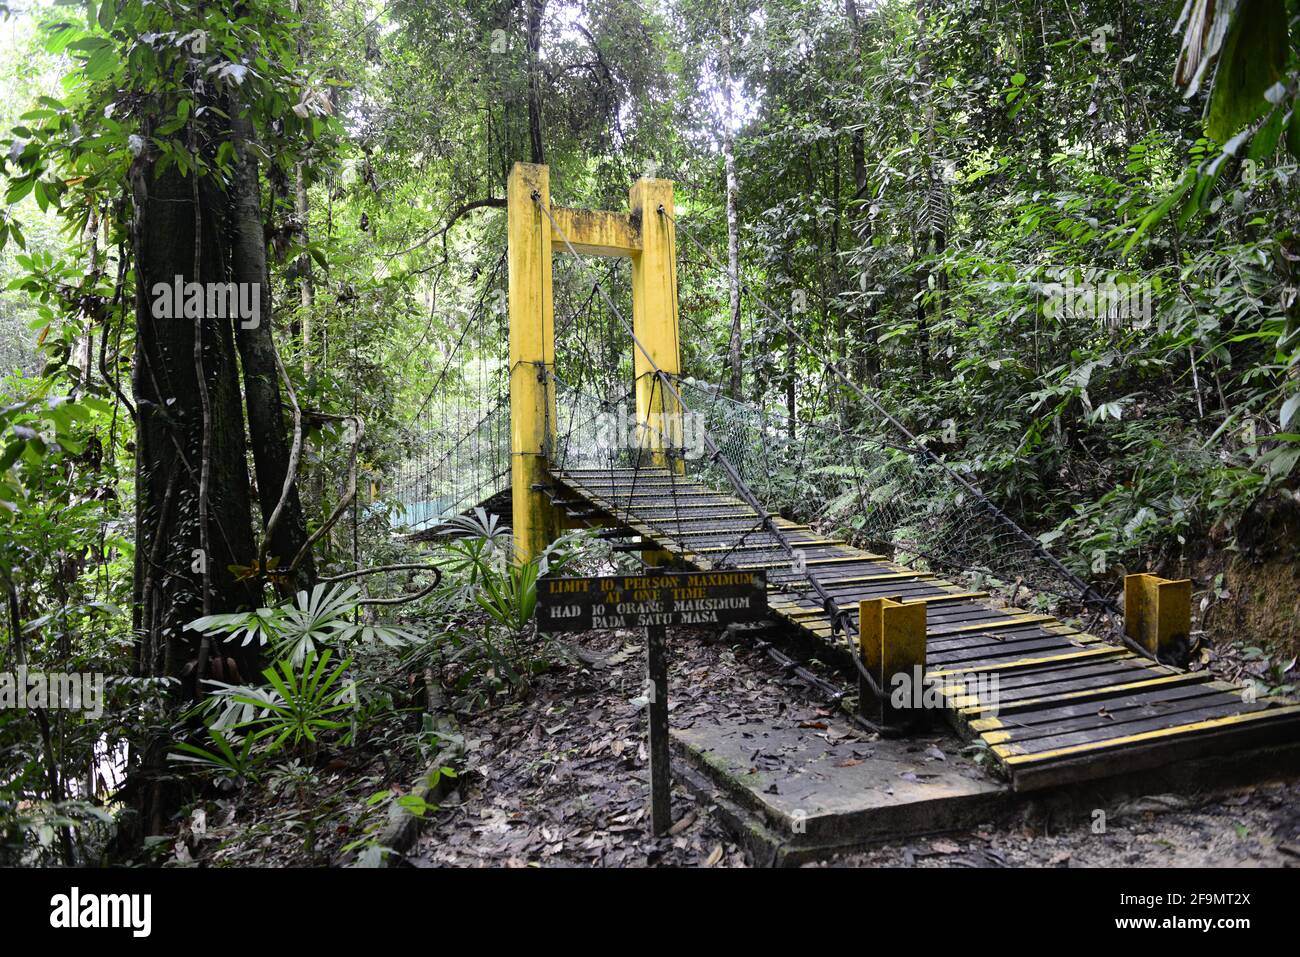 Walking through the rainforest in Lambir Hills National Park in Sarawak. Stock Photo